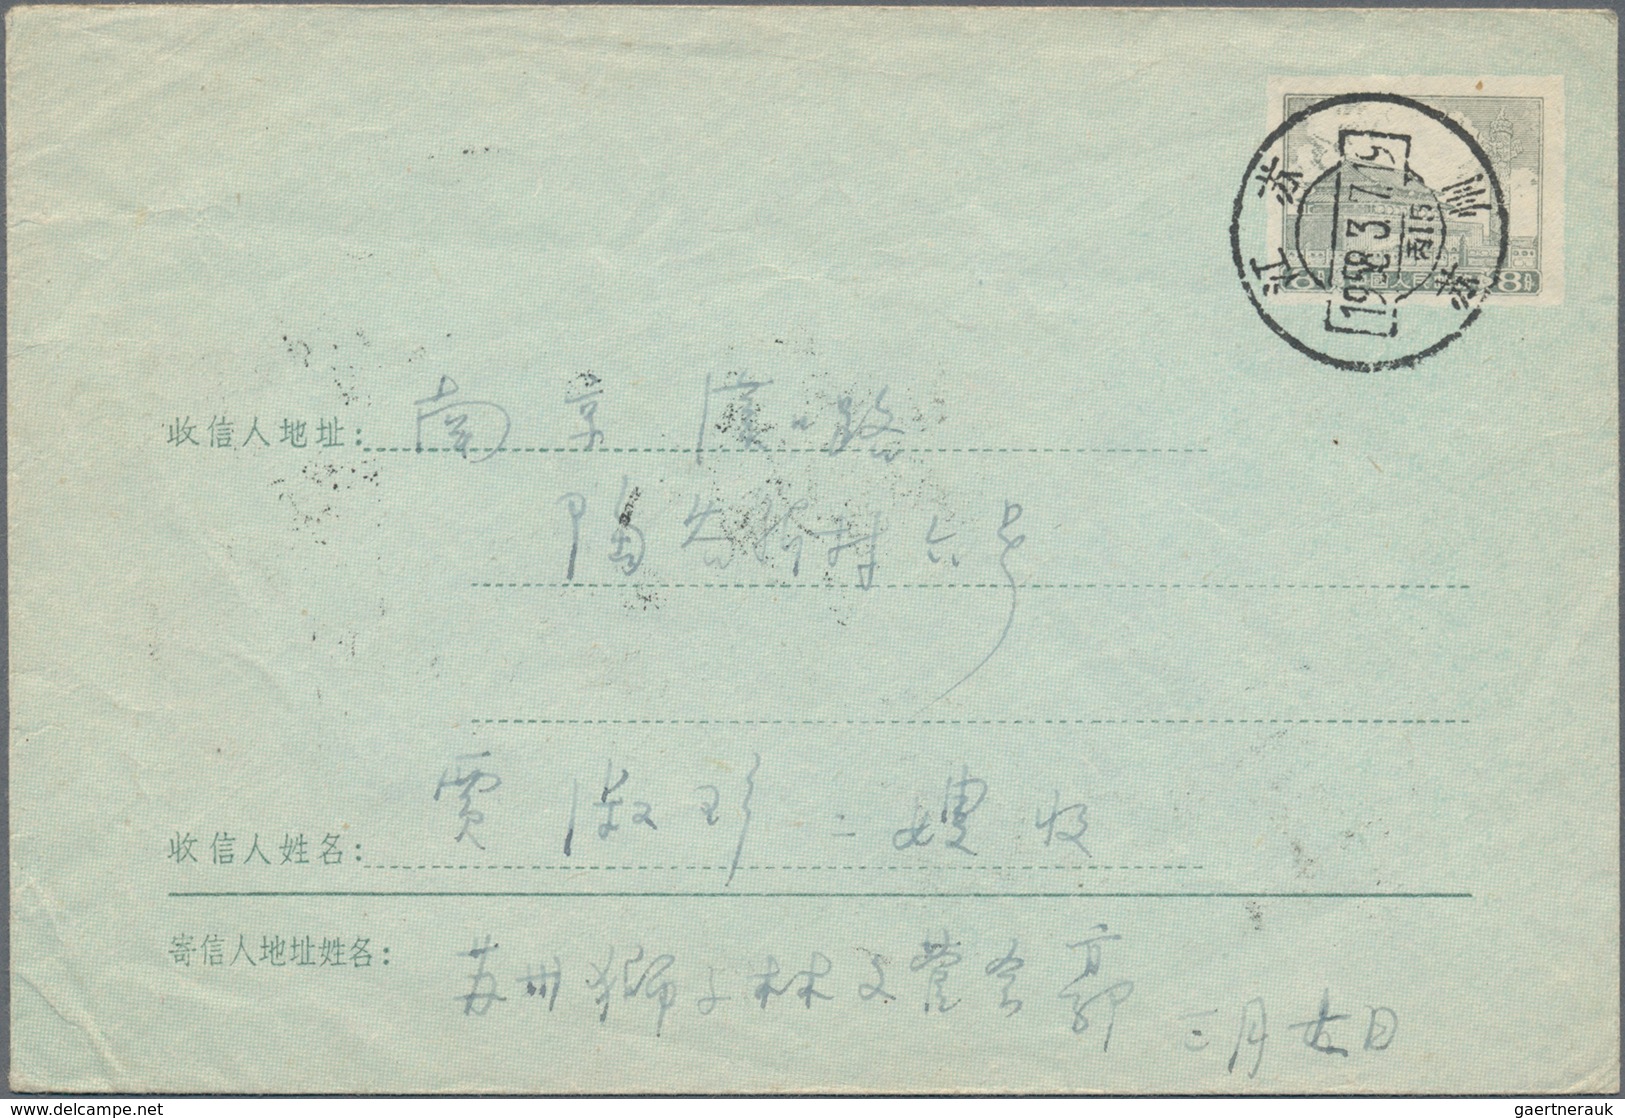 China - Volksrepublik - Ganzsachen: 1957, Envelope 8 F. Grey (2), Imprint 3-1957 Canc. ""Kiangsu Soo - Postcards